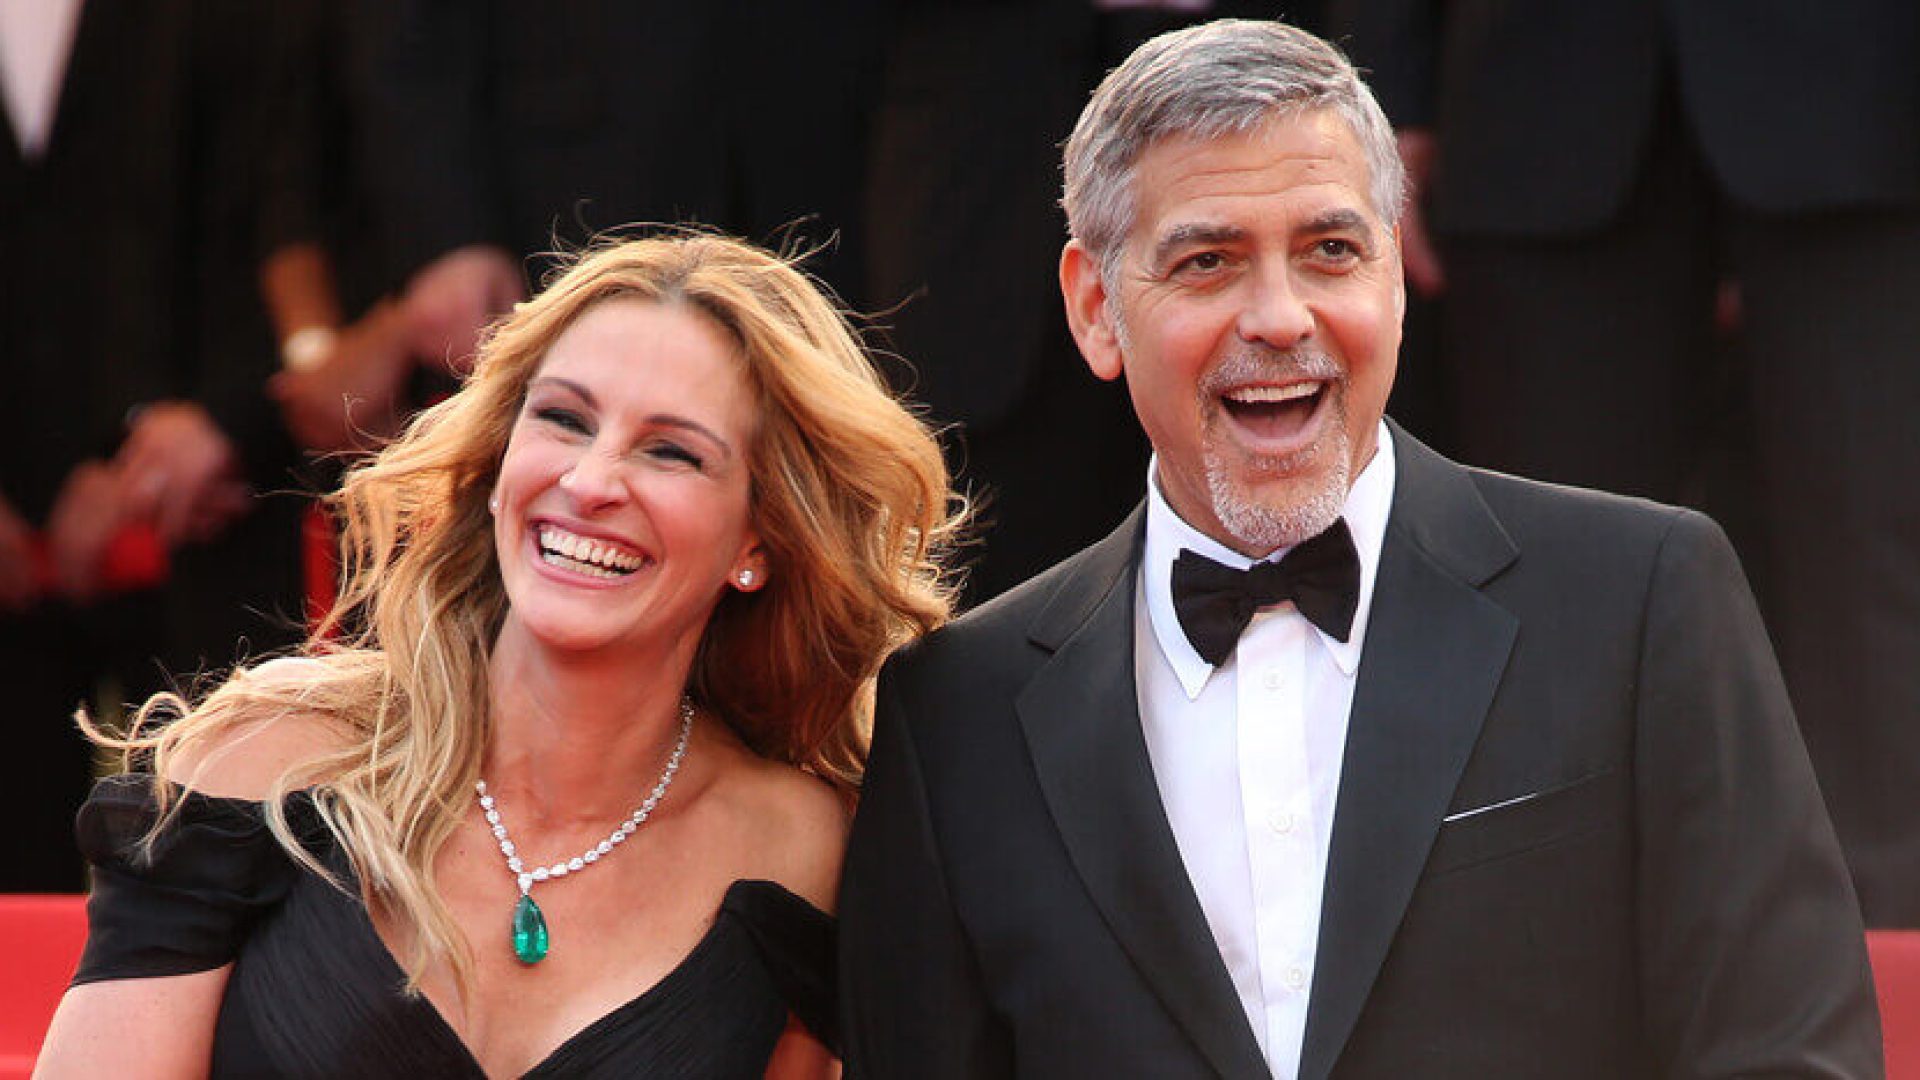 George-Clooney-Julia-Roberts